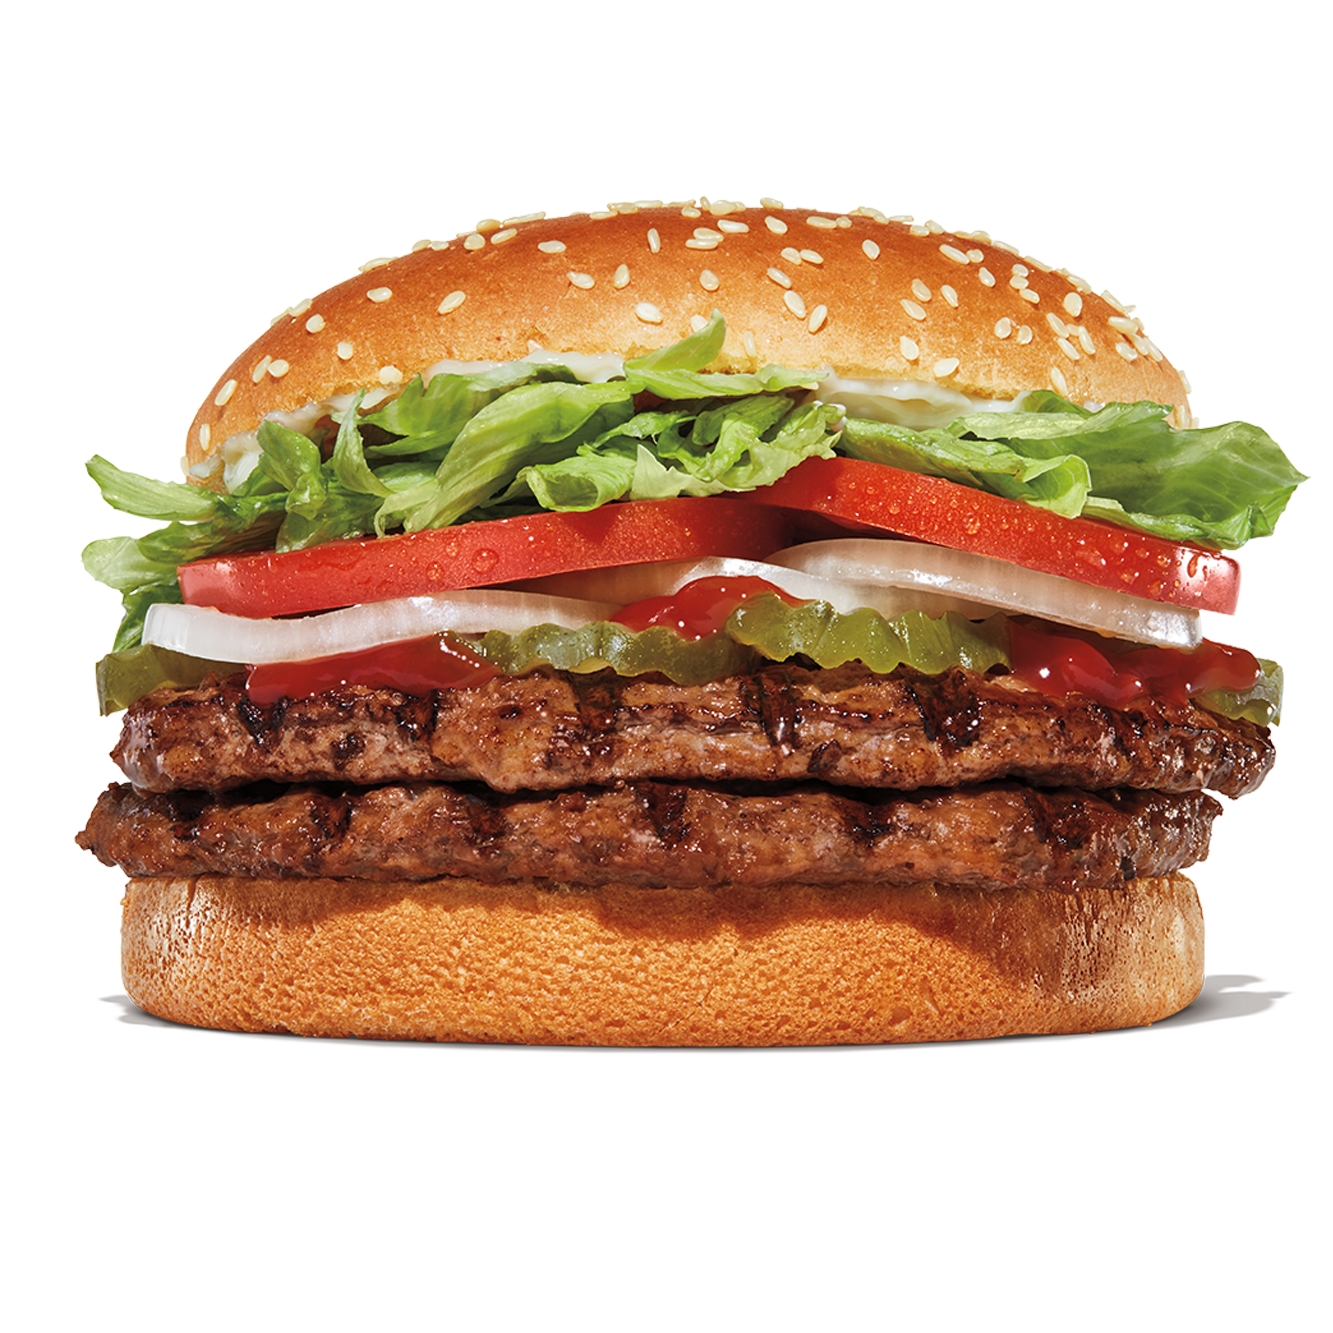 Burger King Chicago (773)568-3358